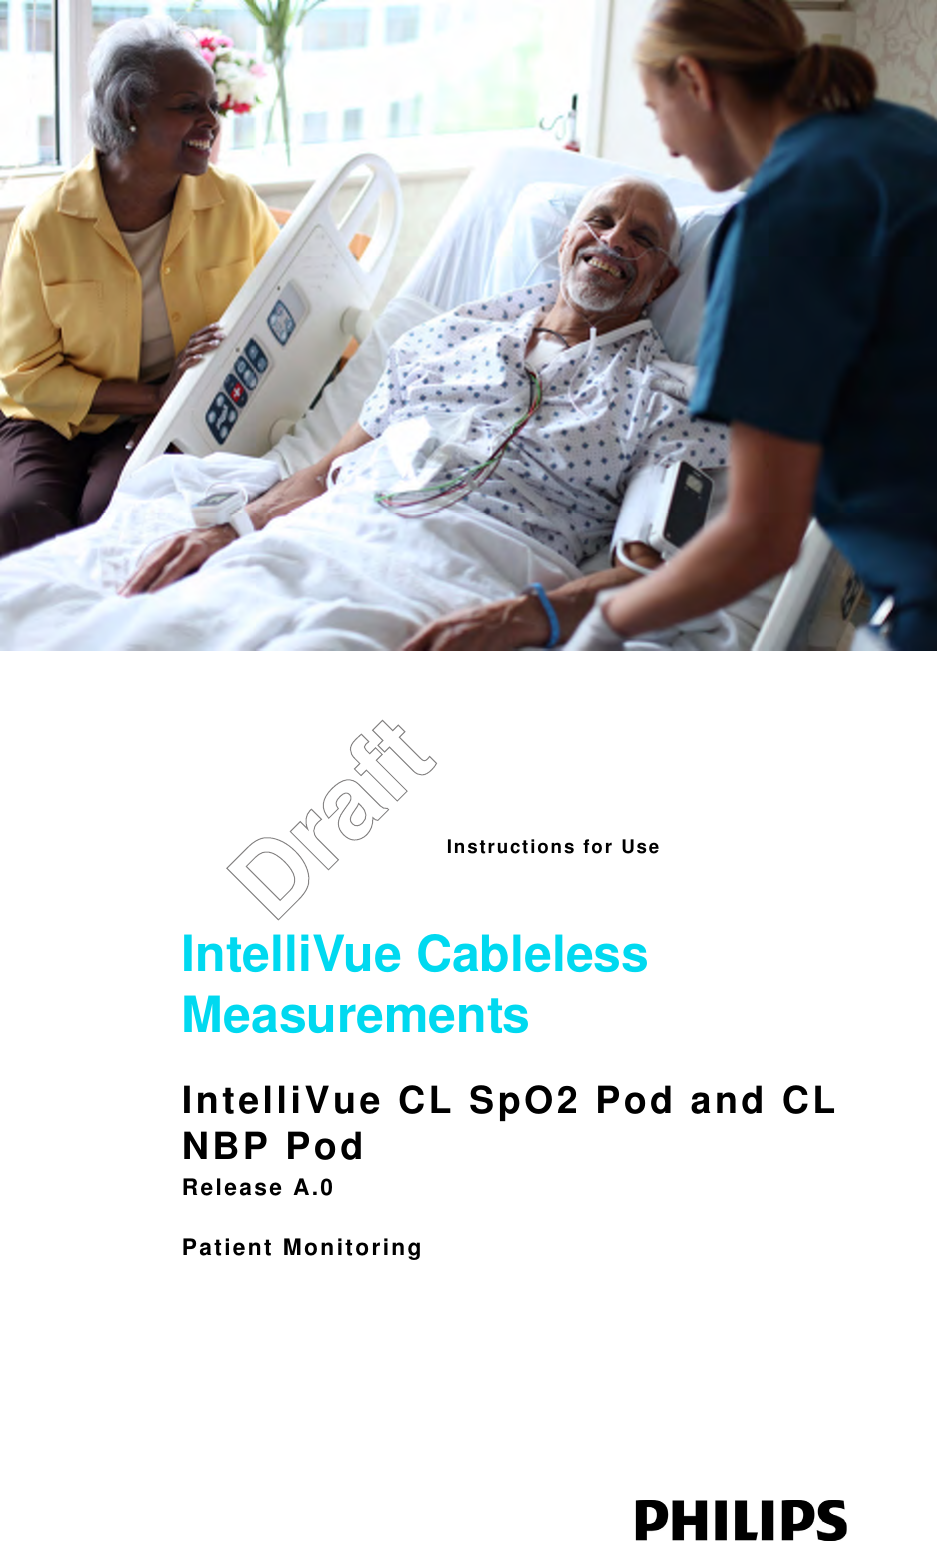 DraftInstructions for UseIntelliVue Cableless MeasurementsIntelliVue CL SpO2 Pod and CL NBP PodRelease A.0Patient Monitoring